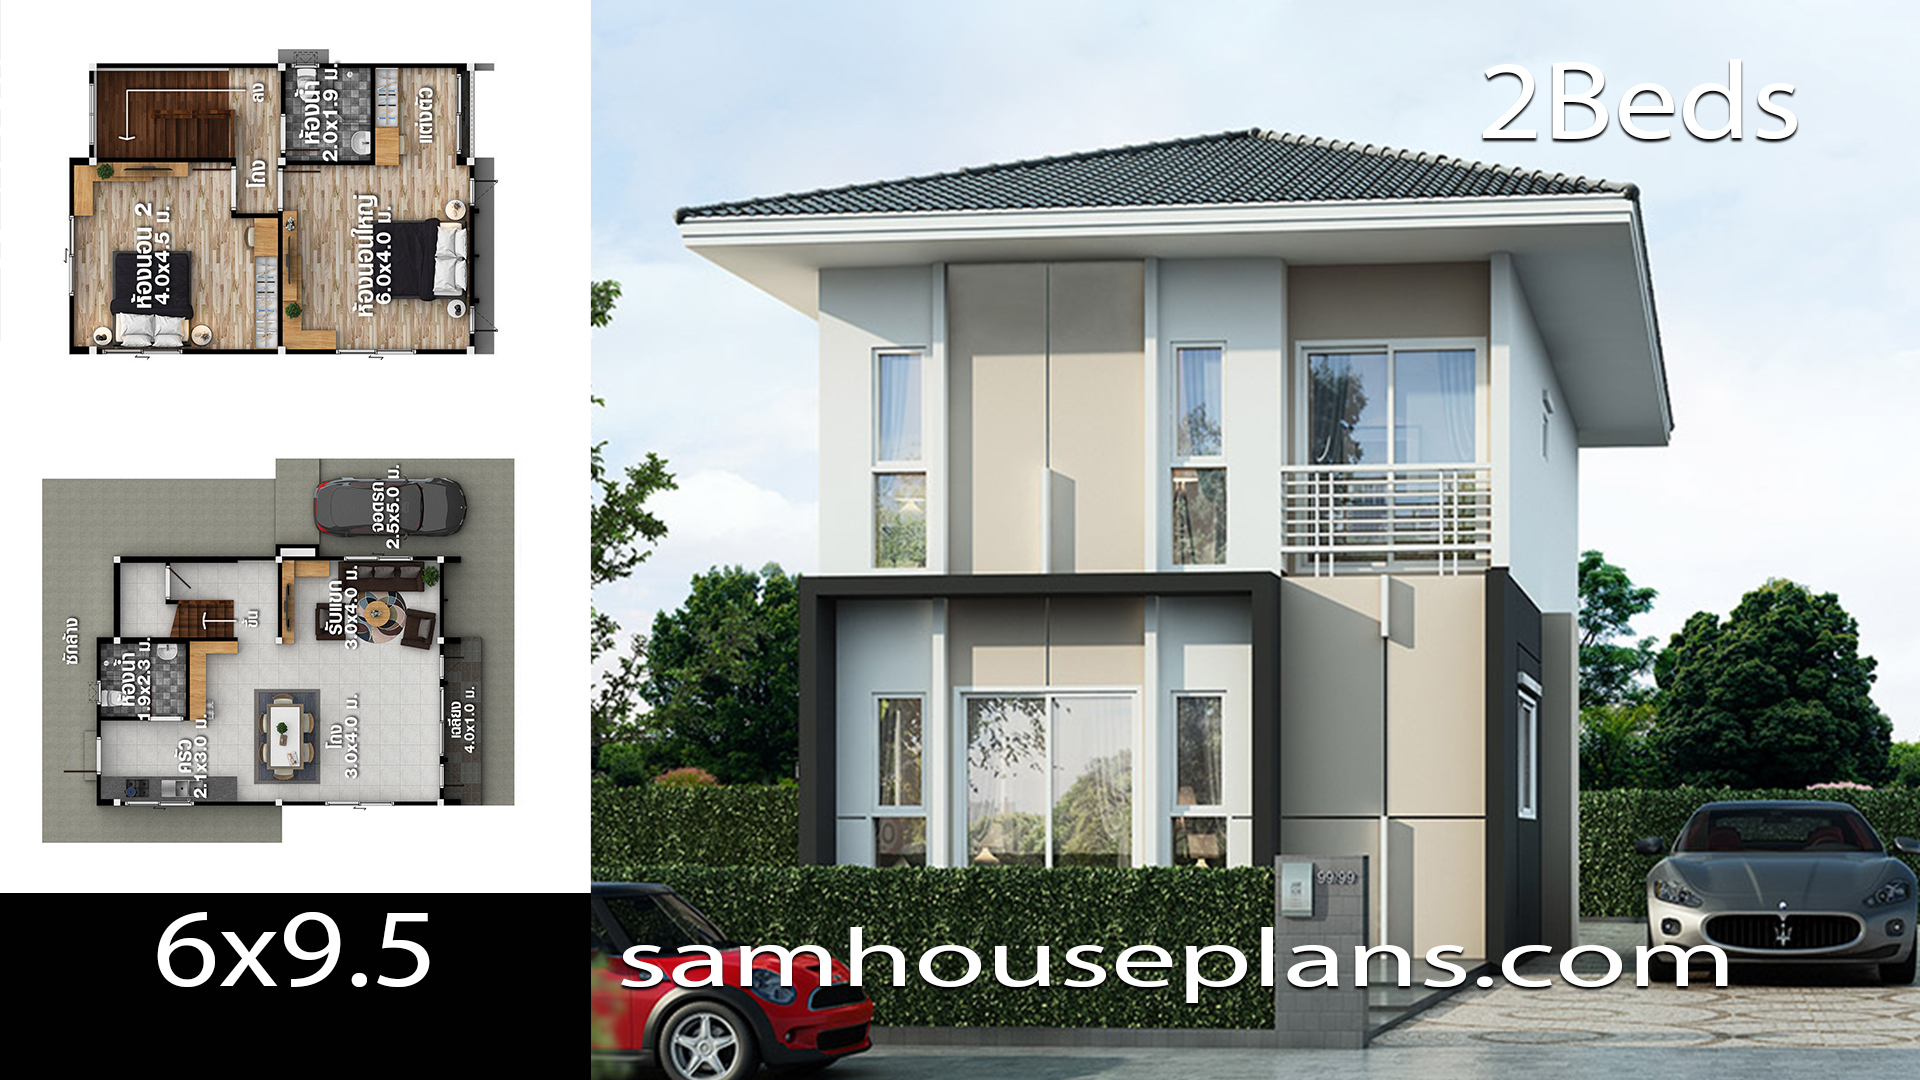 House Plans Idea 6x9 5 With 2 Bedrooms Samhouseplans